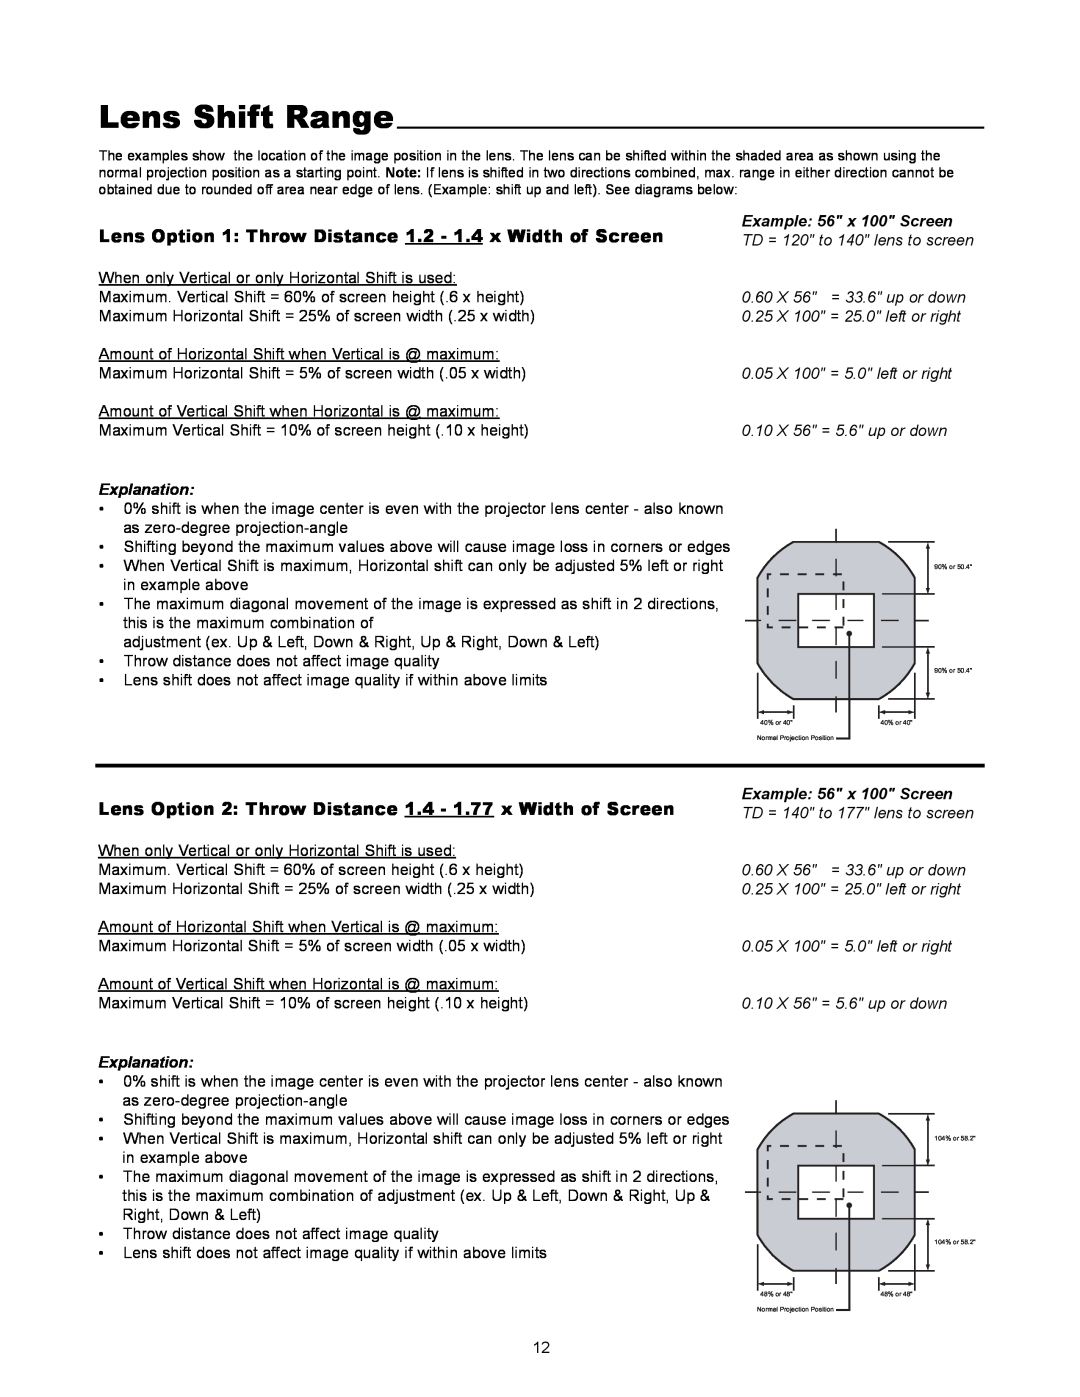 Runco VX-4000ci manual Lens Shift Range, Lens Option 1 Throw Distance 1.2 - 1.4 x Width of Screen, Explanation 